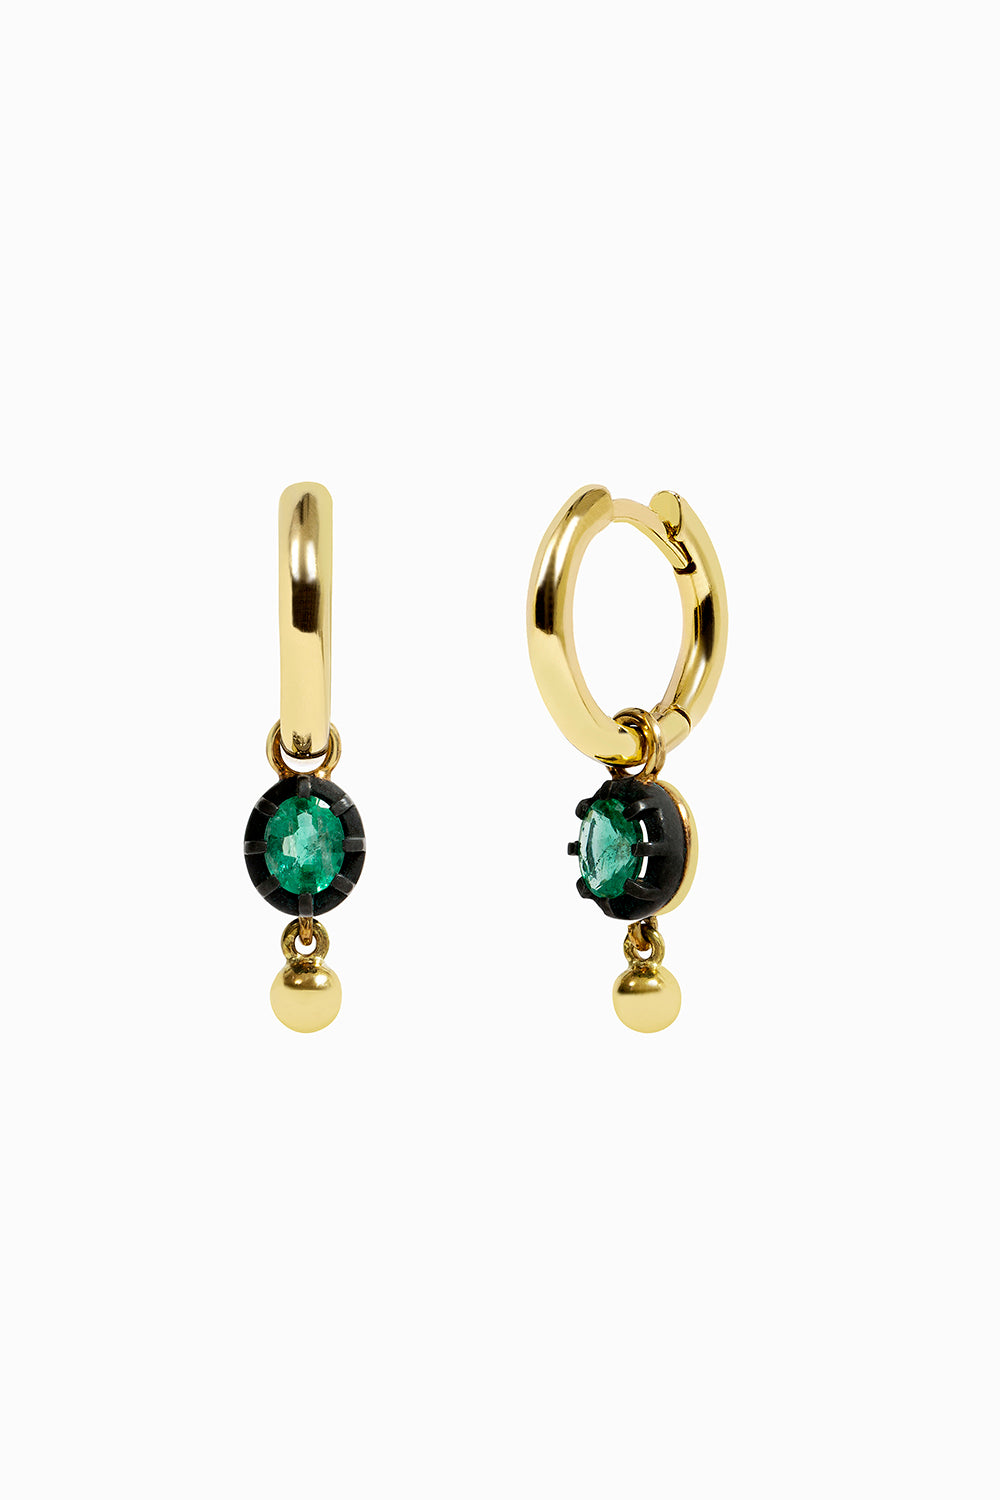 Emerald and ball hoop earrings